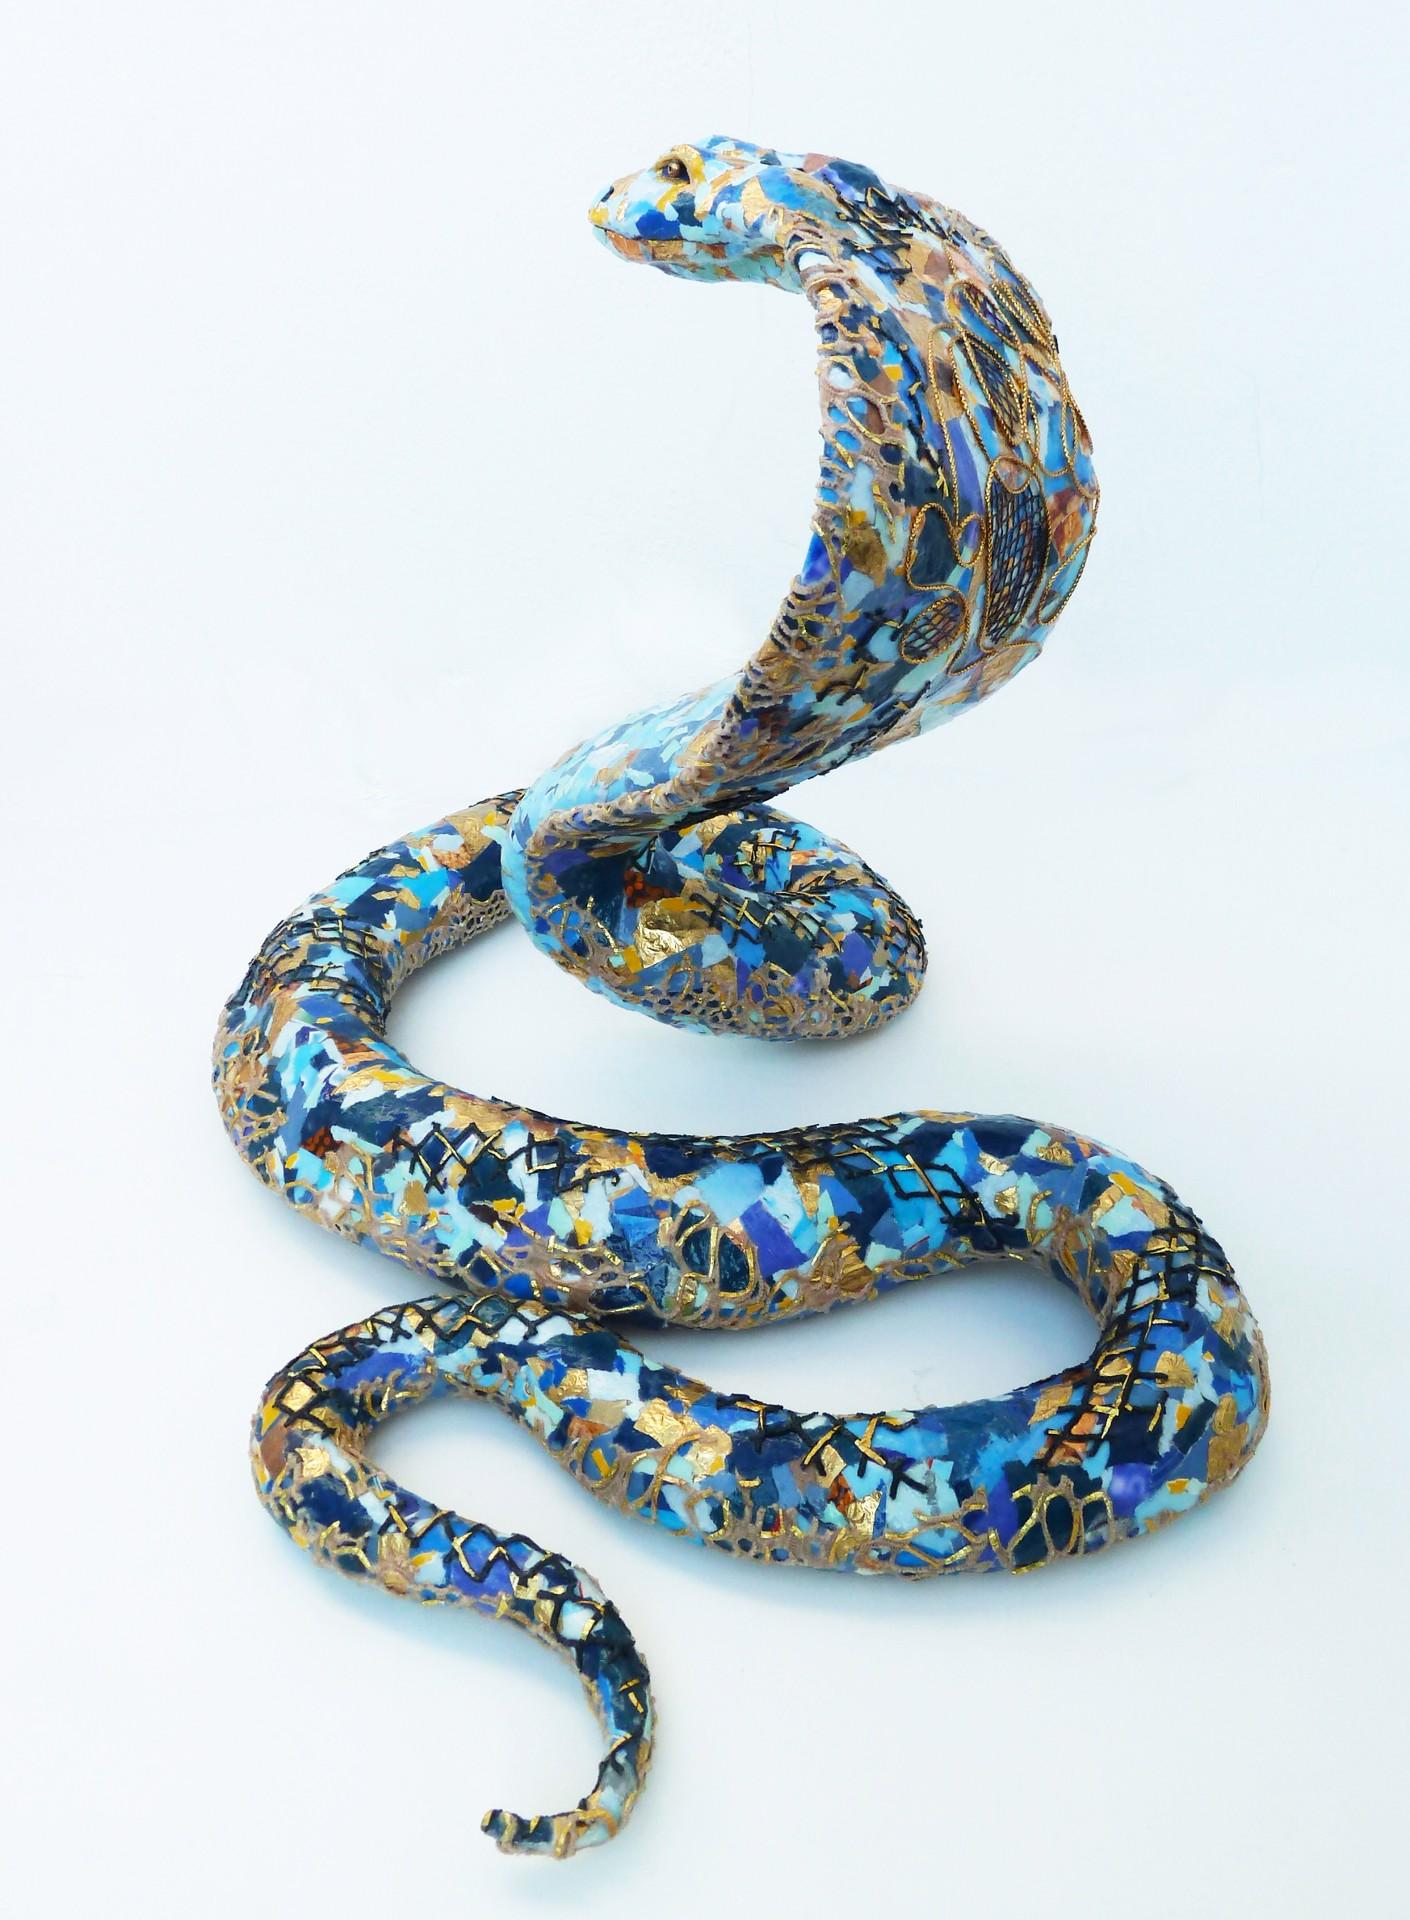 Kara le Cobra - Sculpture contemporaine de serpent Matériaux Upcylced  (bleu + or) - Contemporain Mixed Media Art par Yulia Shtern